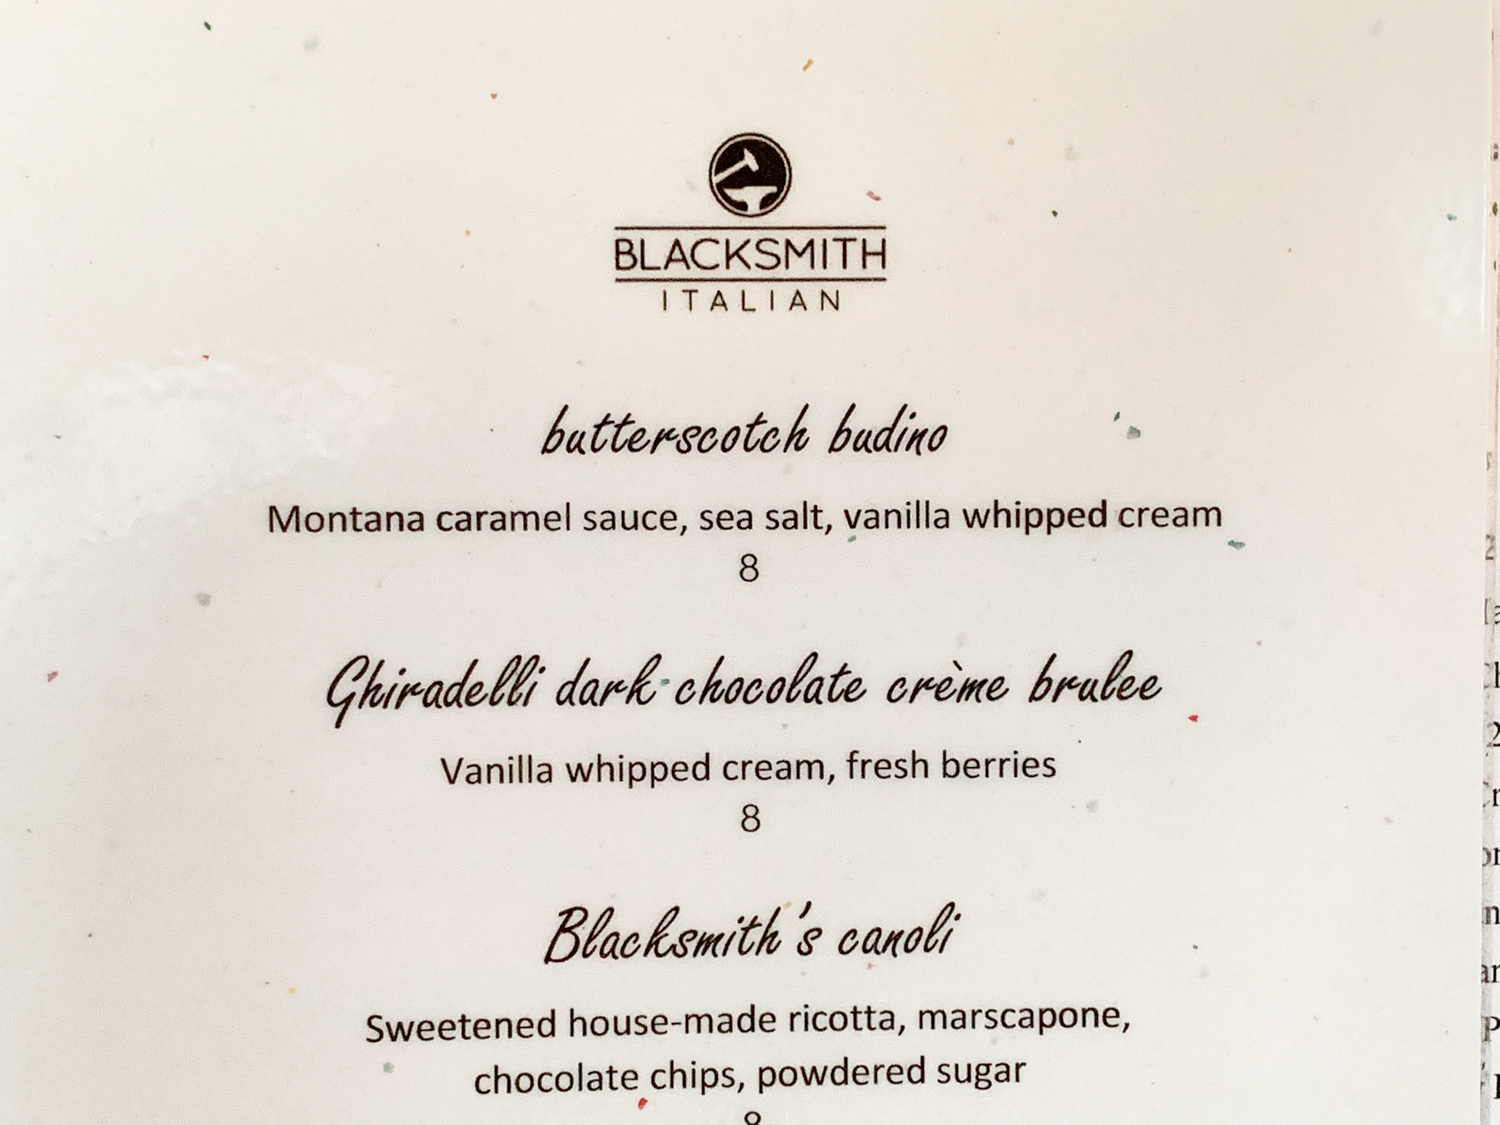 The Butterscotch Budino at Blacksmith Italian – A Culinary Treasure! By Steven Shomler